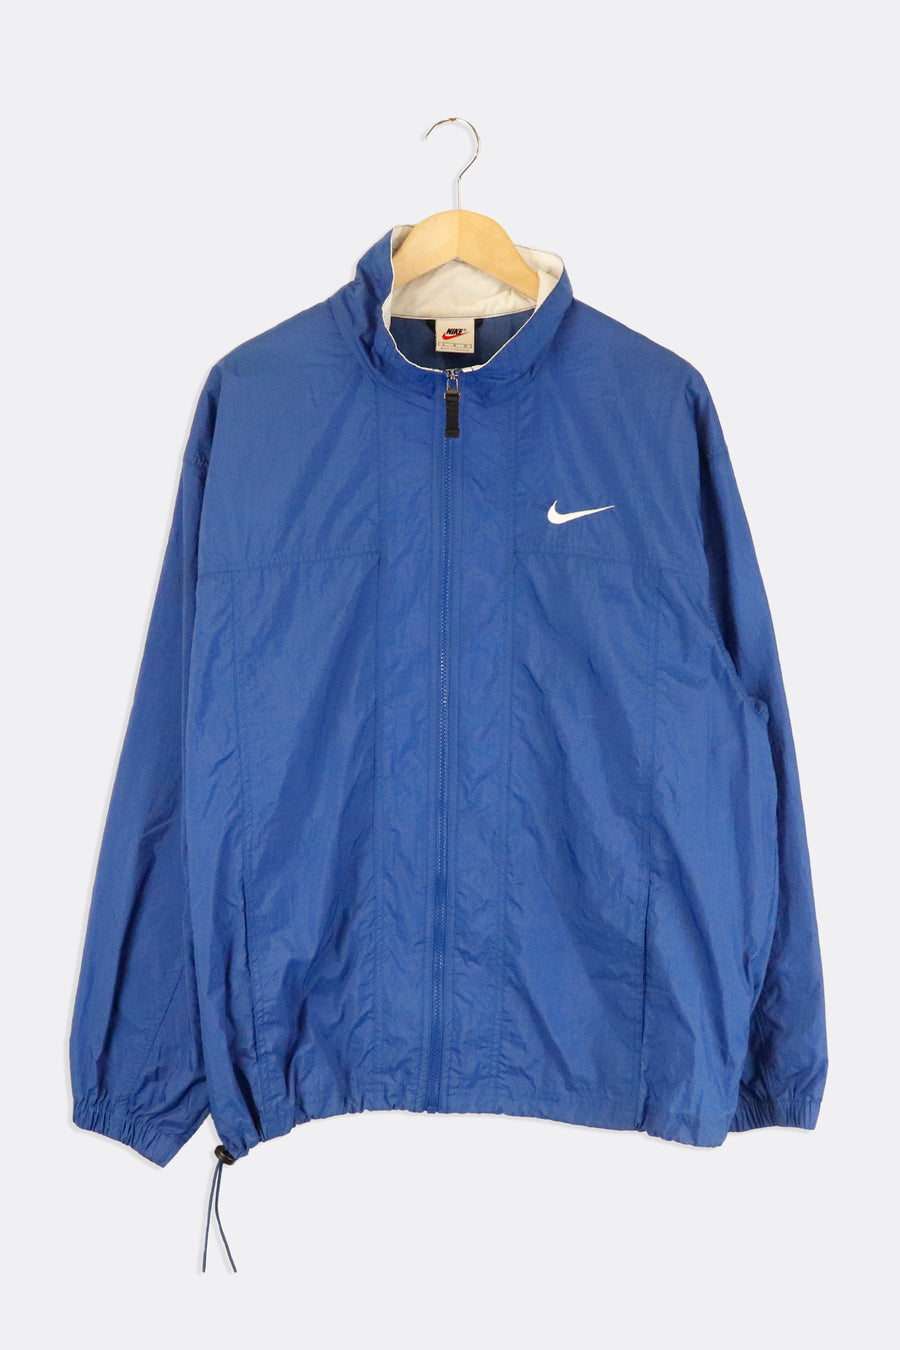 Vintage Nike Full Zip Simple Large Swoop On Front Snd Back Jacket Sz L